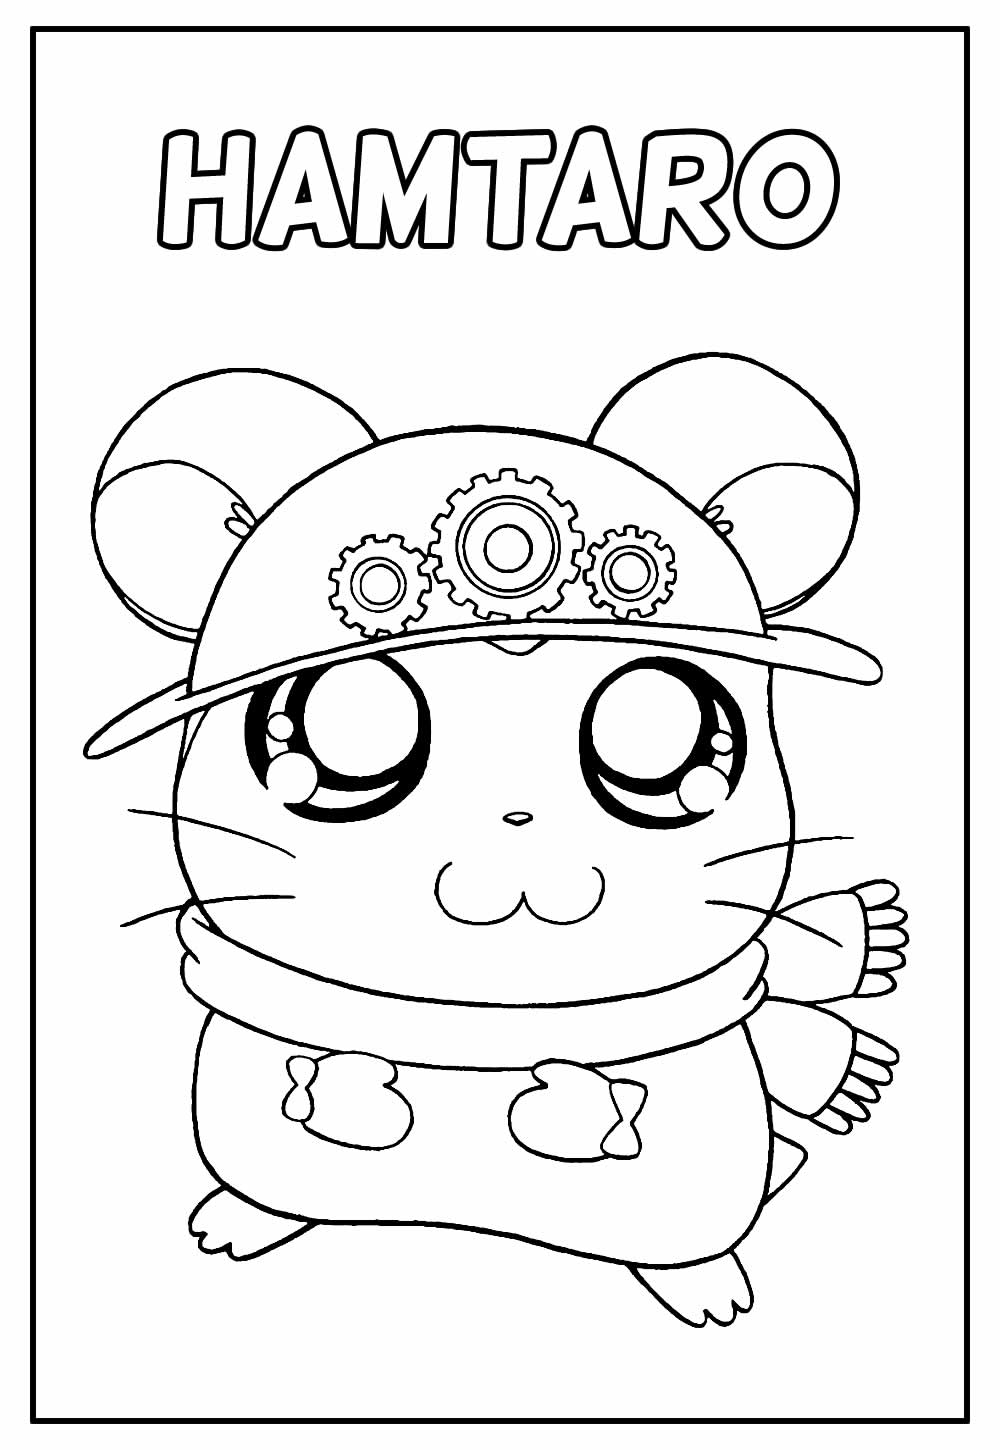 Desenho de Hamtaro para colorir